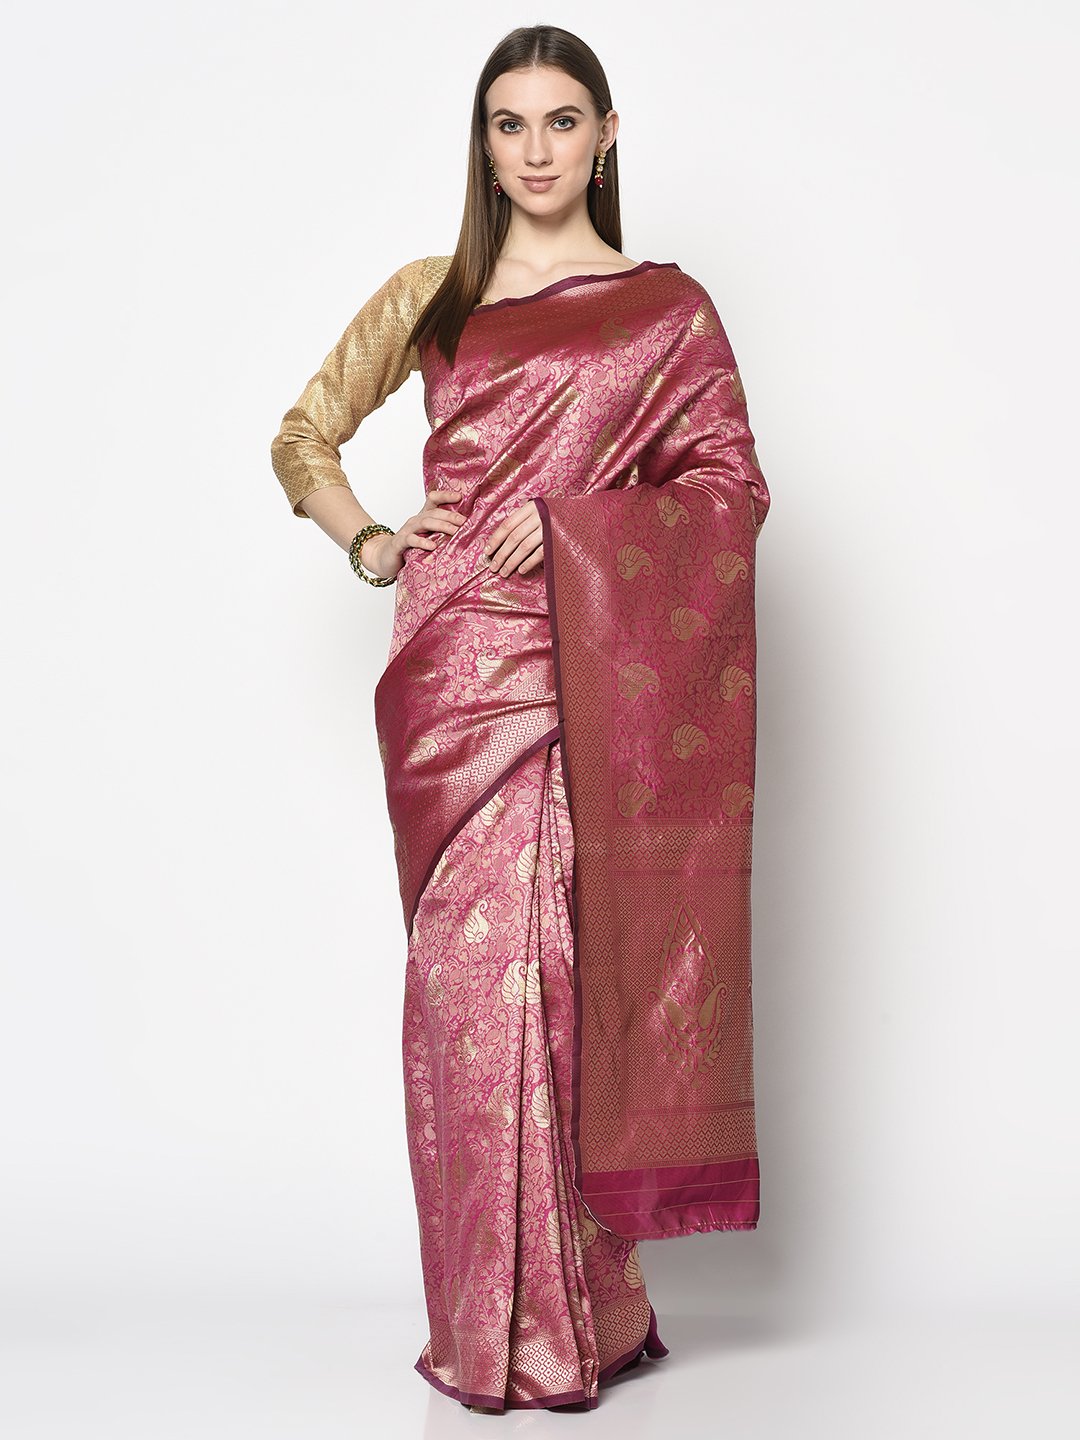 Shop Handloom Saree In Dark Pink Colour which is Saree online at simaaya At